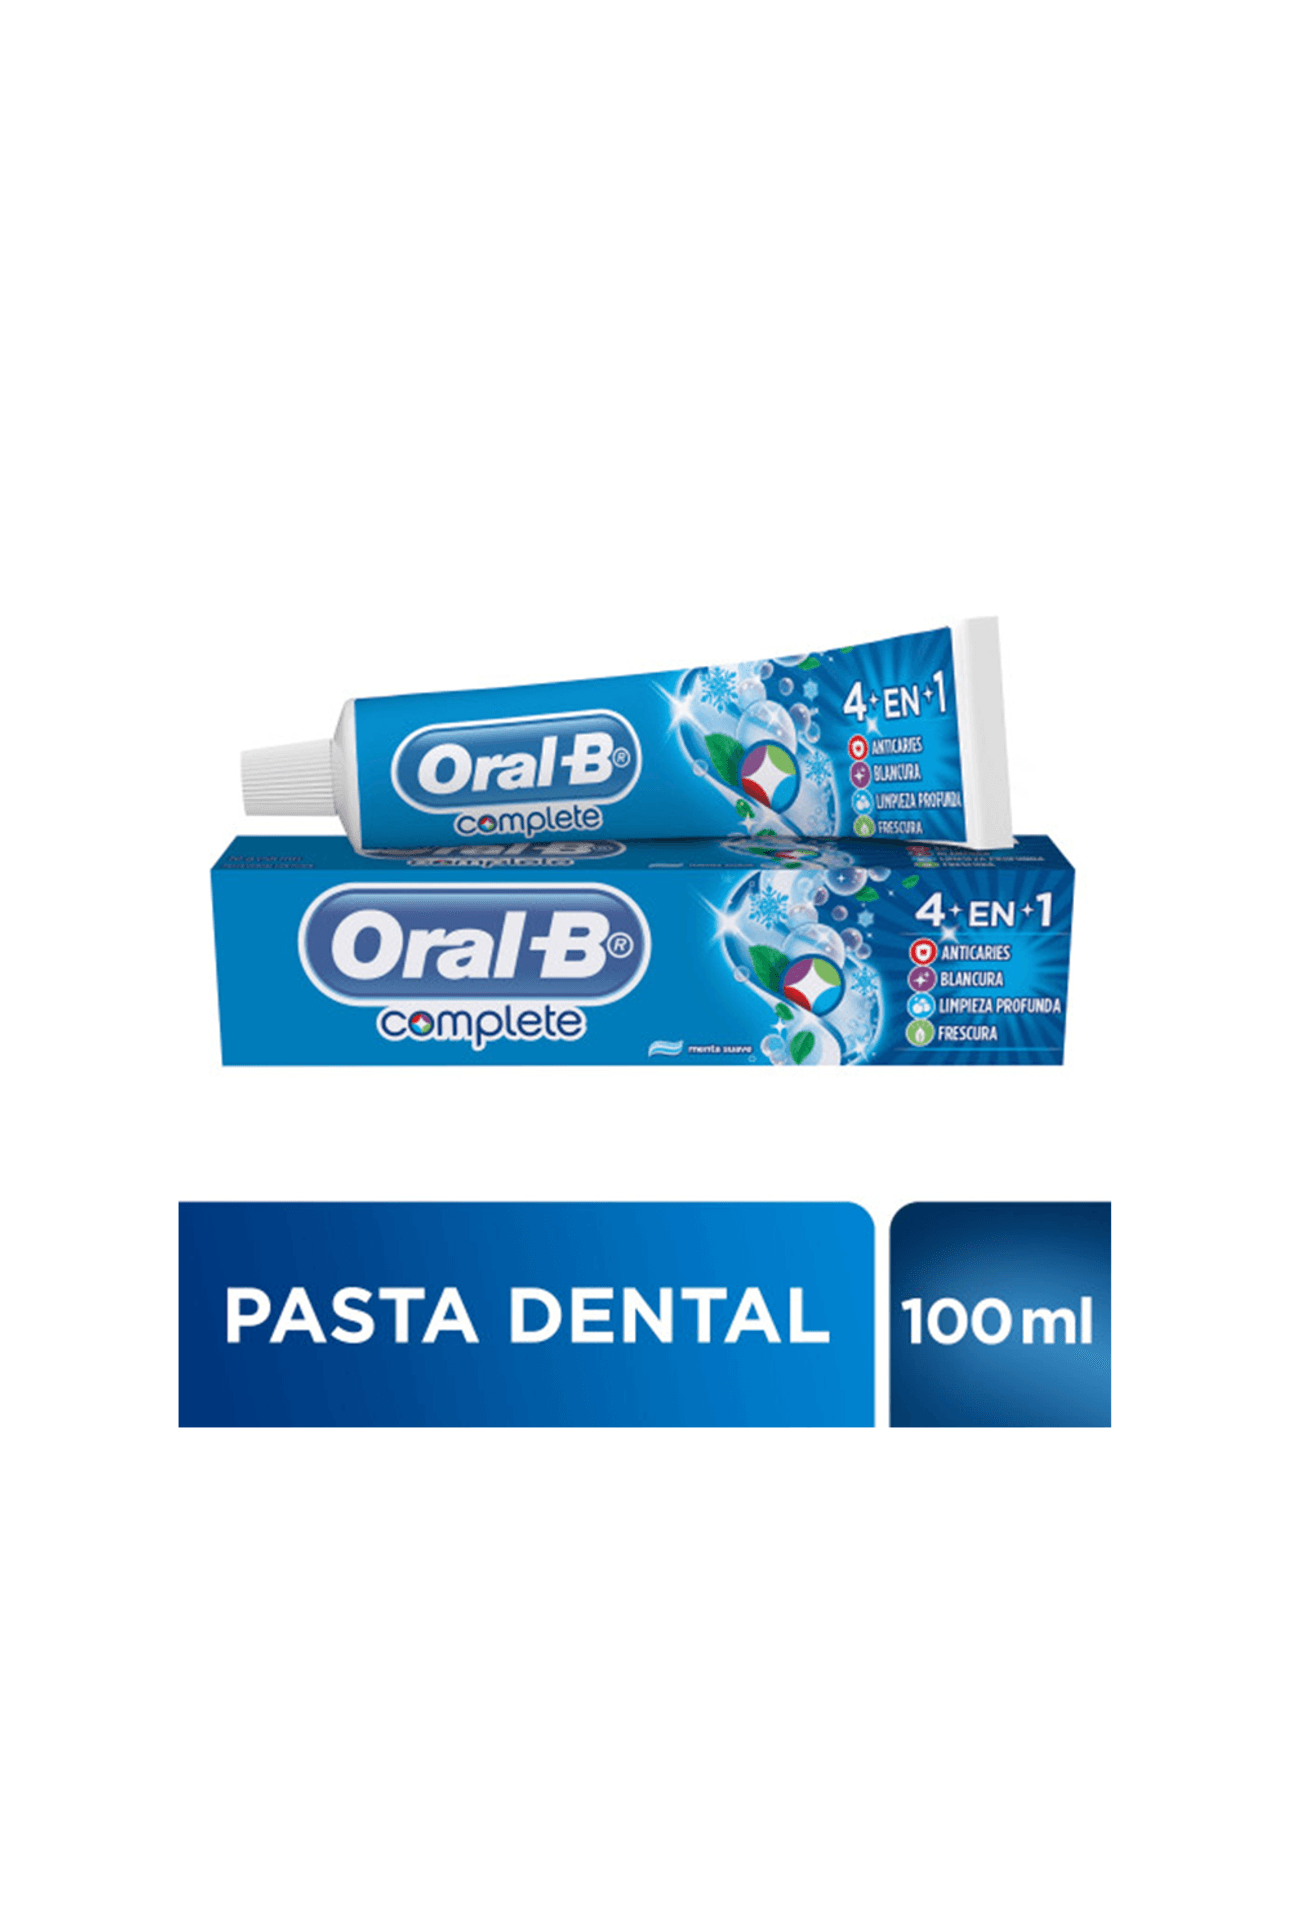 Oral-B-Pasta-Dental-Oral-B-Complete-Limpieza-Profunda-x-140gr-7506195131664_img1